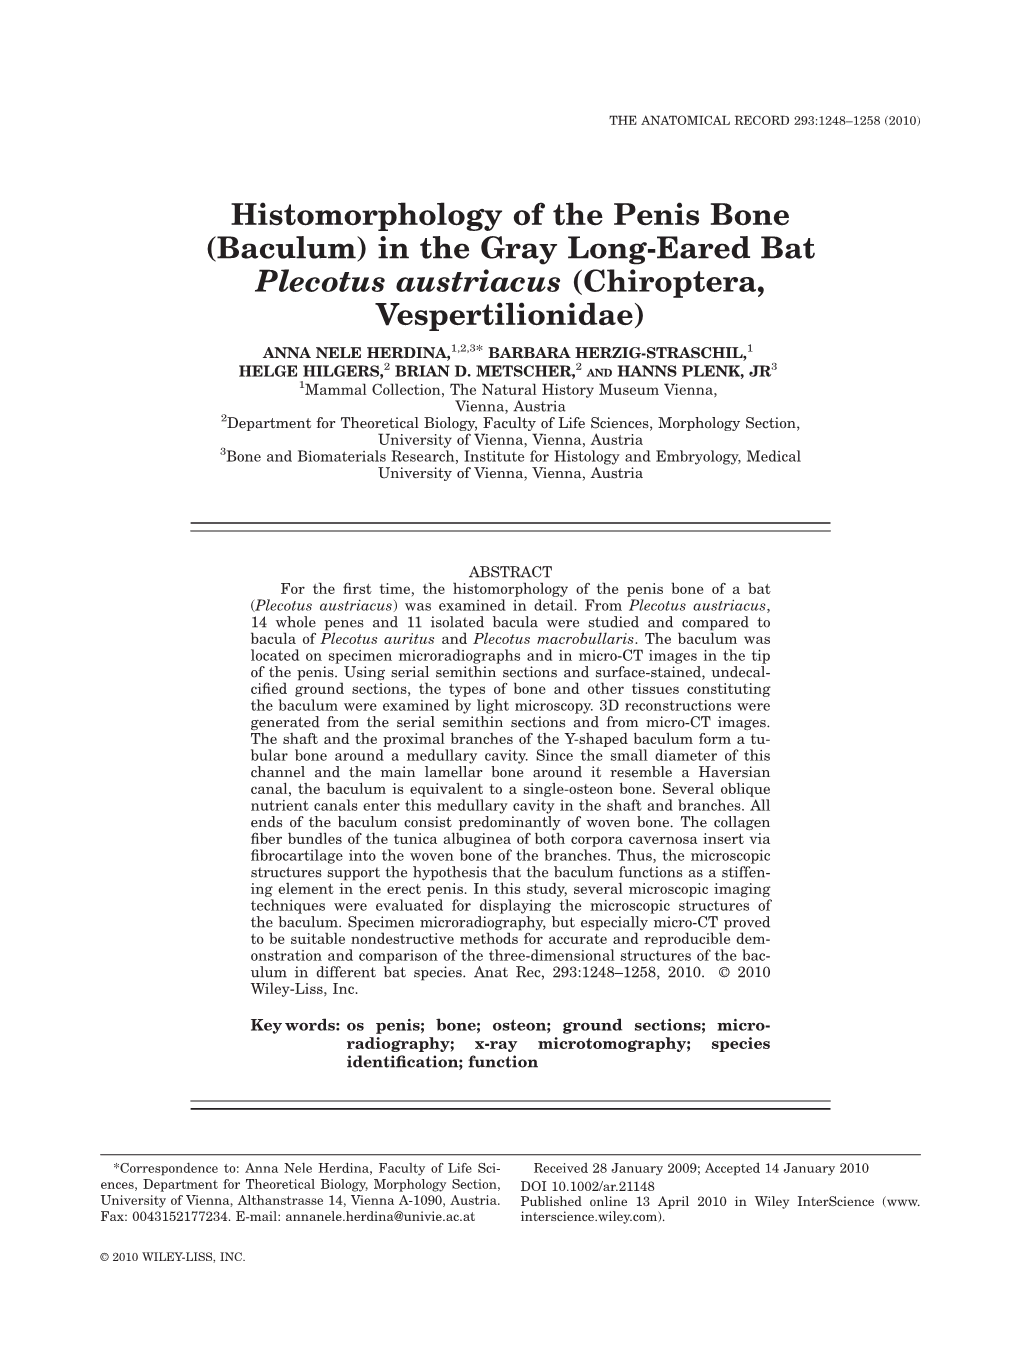 Histomorphology of the Penis Bone (Baculum) in the Gray Longeared Bat Plecotus Austriacus (Chiroptera, Vespertilionidae)